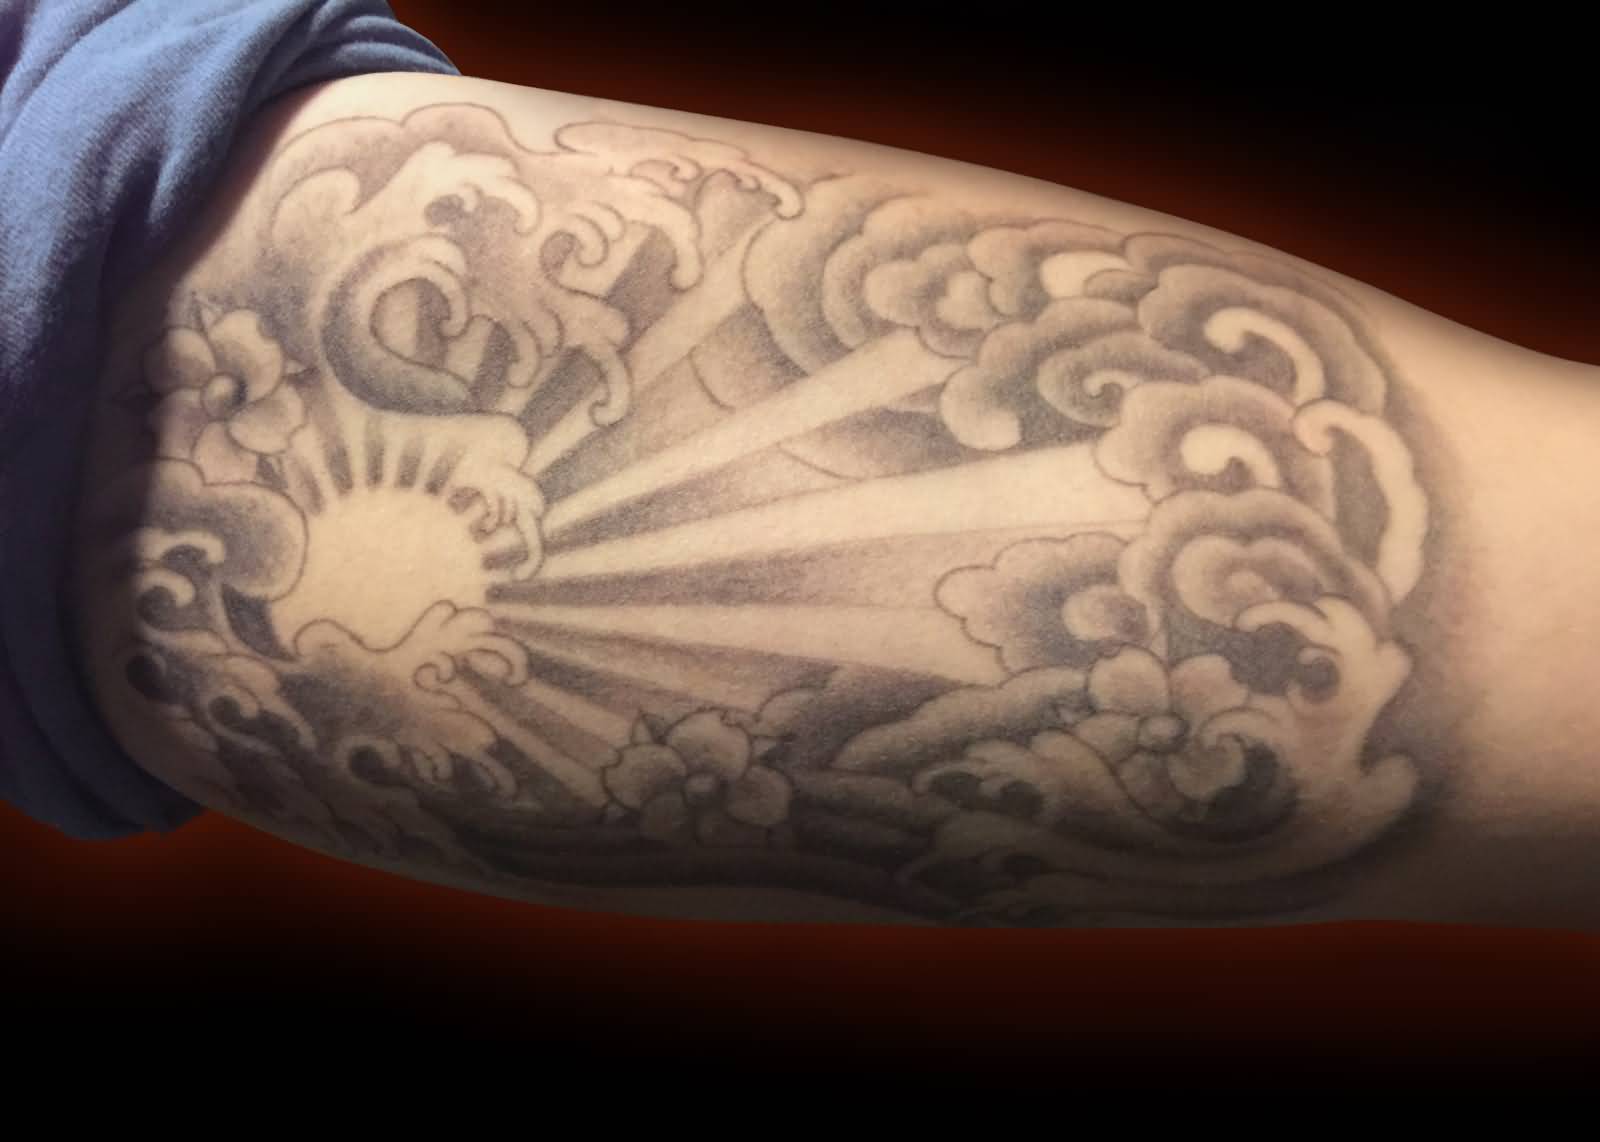 Sun behind Cloud Tattoo On Forearm